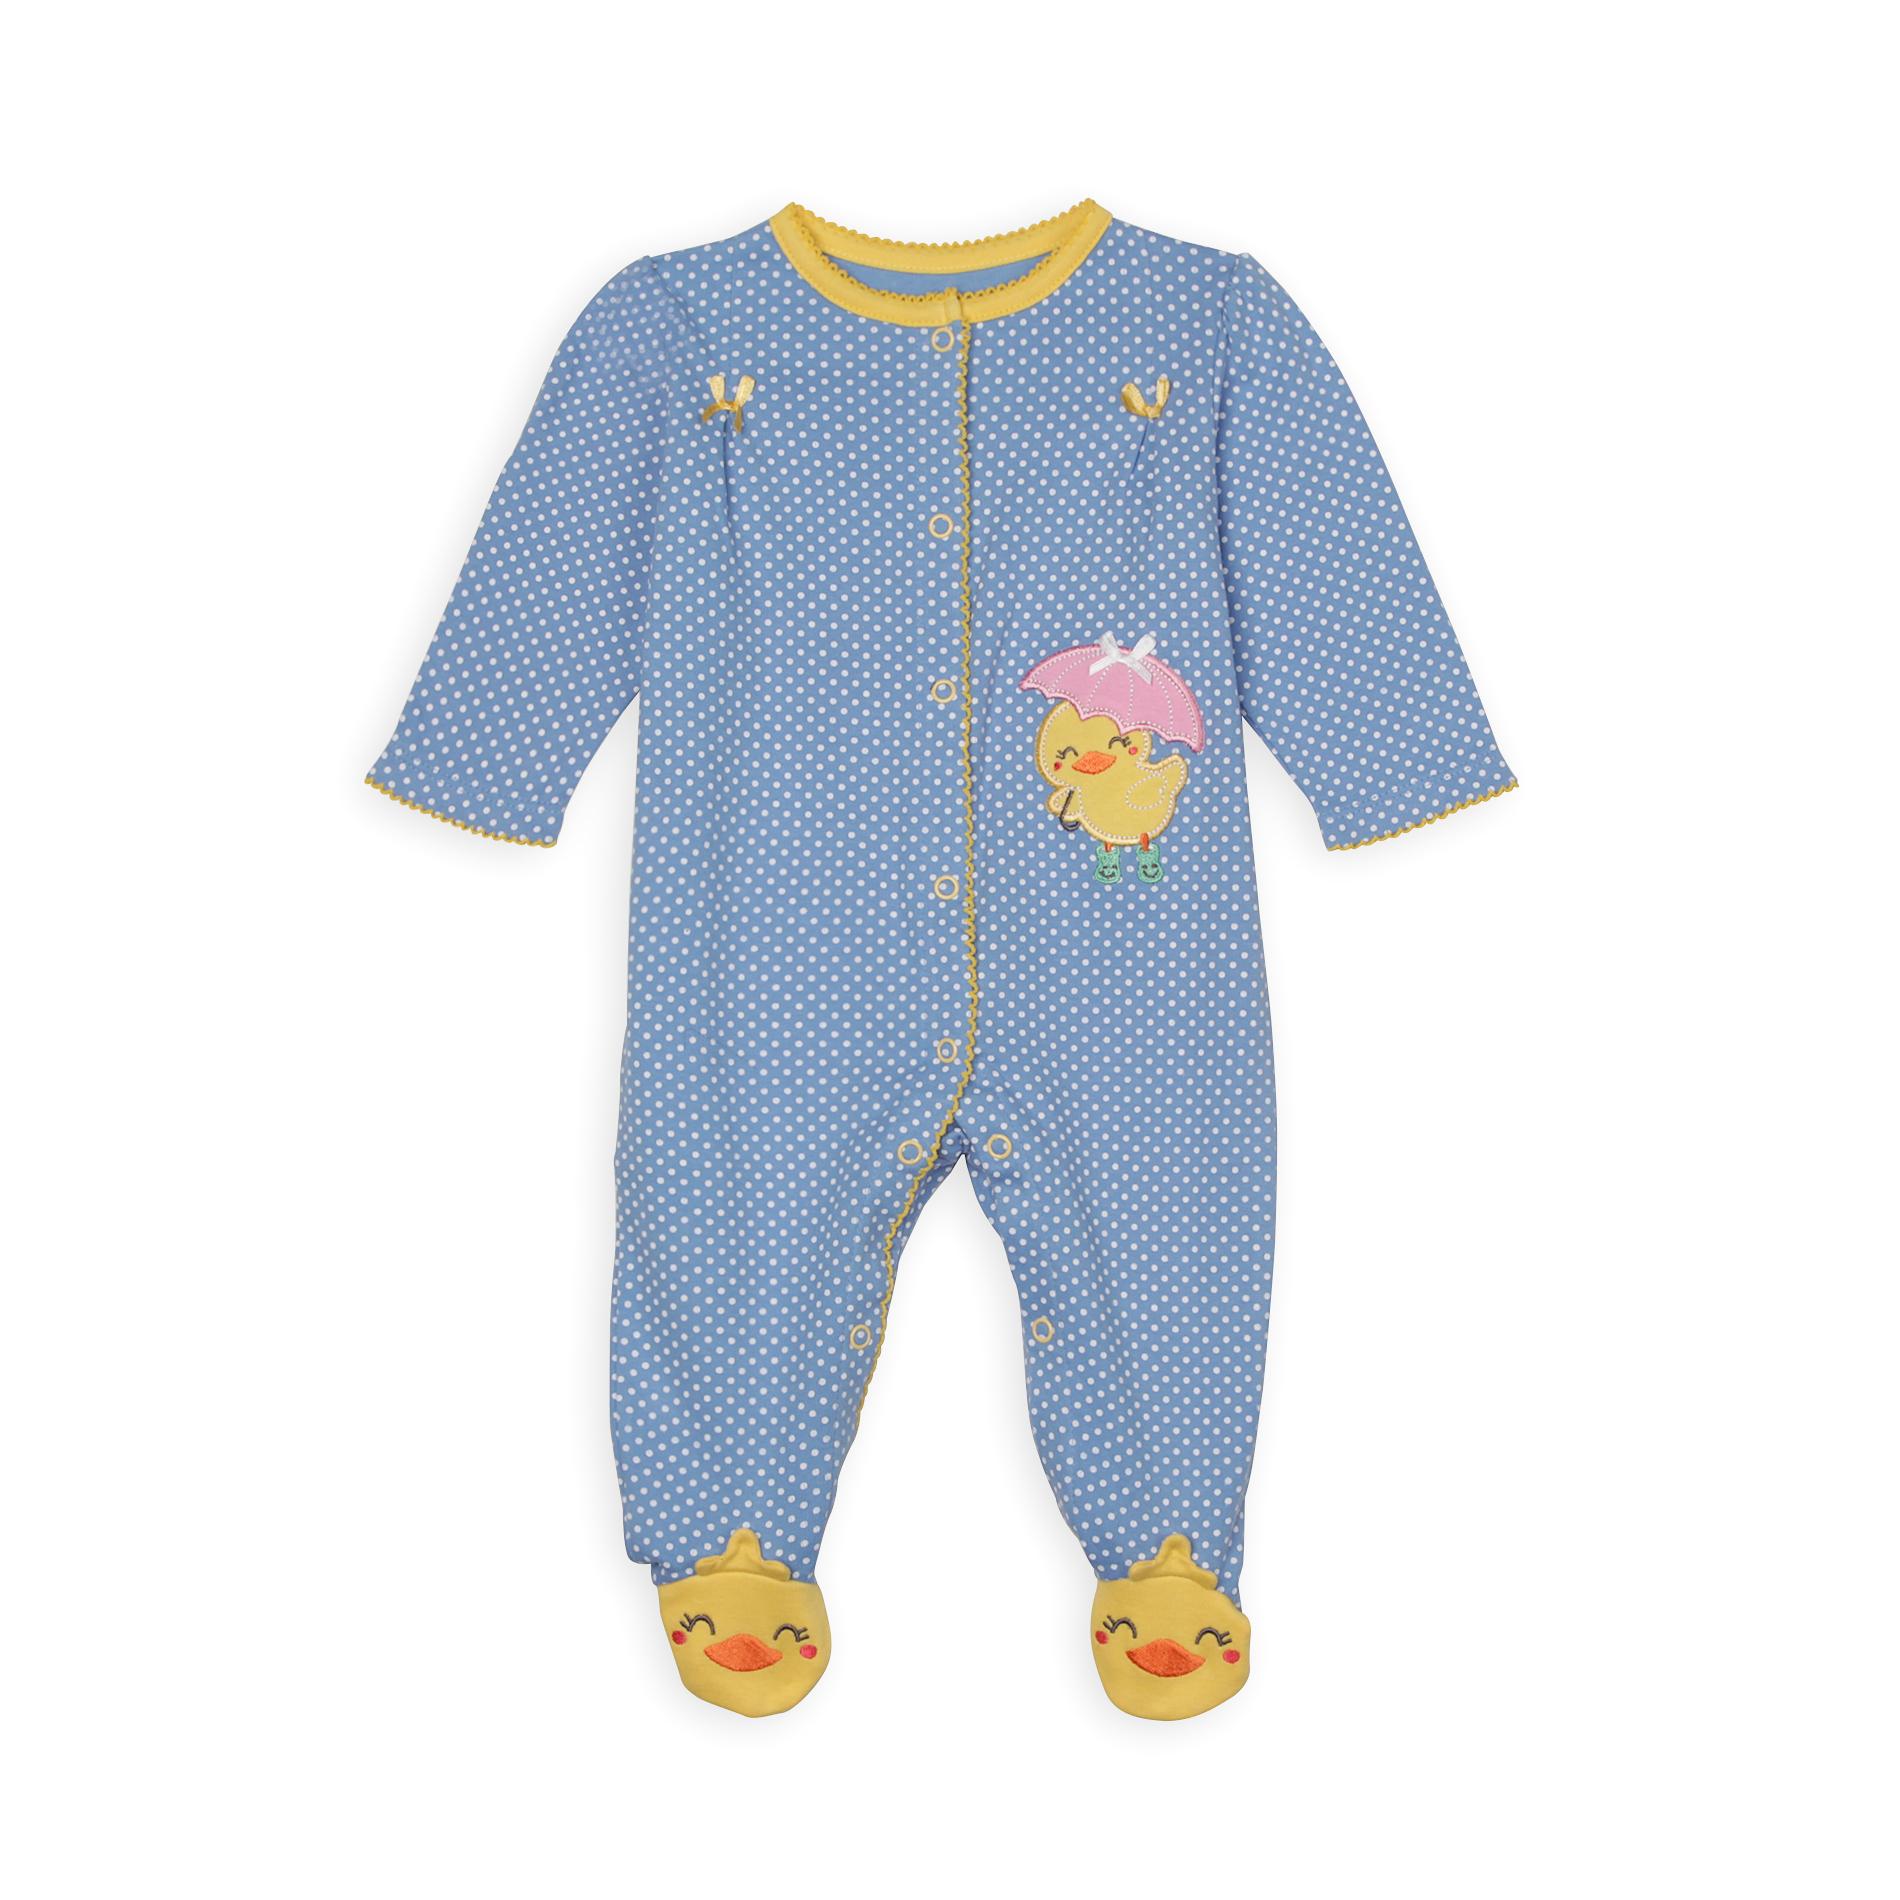 Small Wonders Newborn Girl's Long-Sleeve Footed Pajamas - Duck